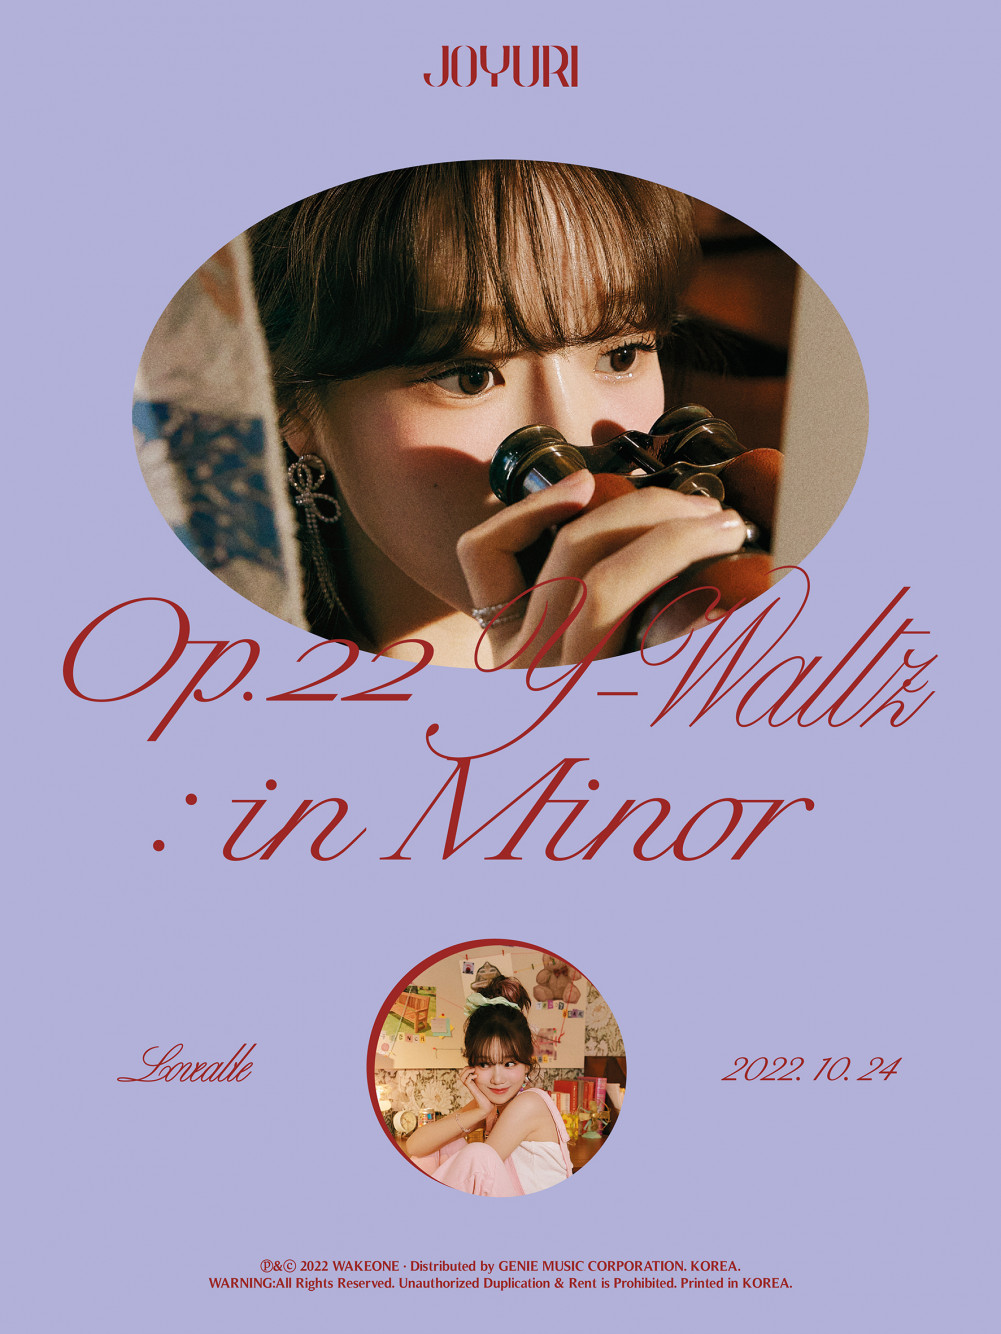 [Камбэк] Чо Юри (ex-IZ*ONE) мини-альбом "Op.22 Y-Waltz: in Minor": фото тизеры